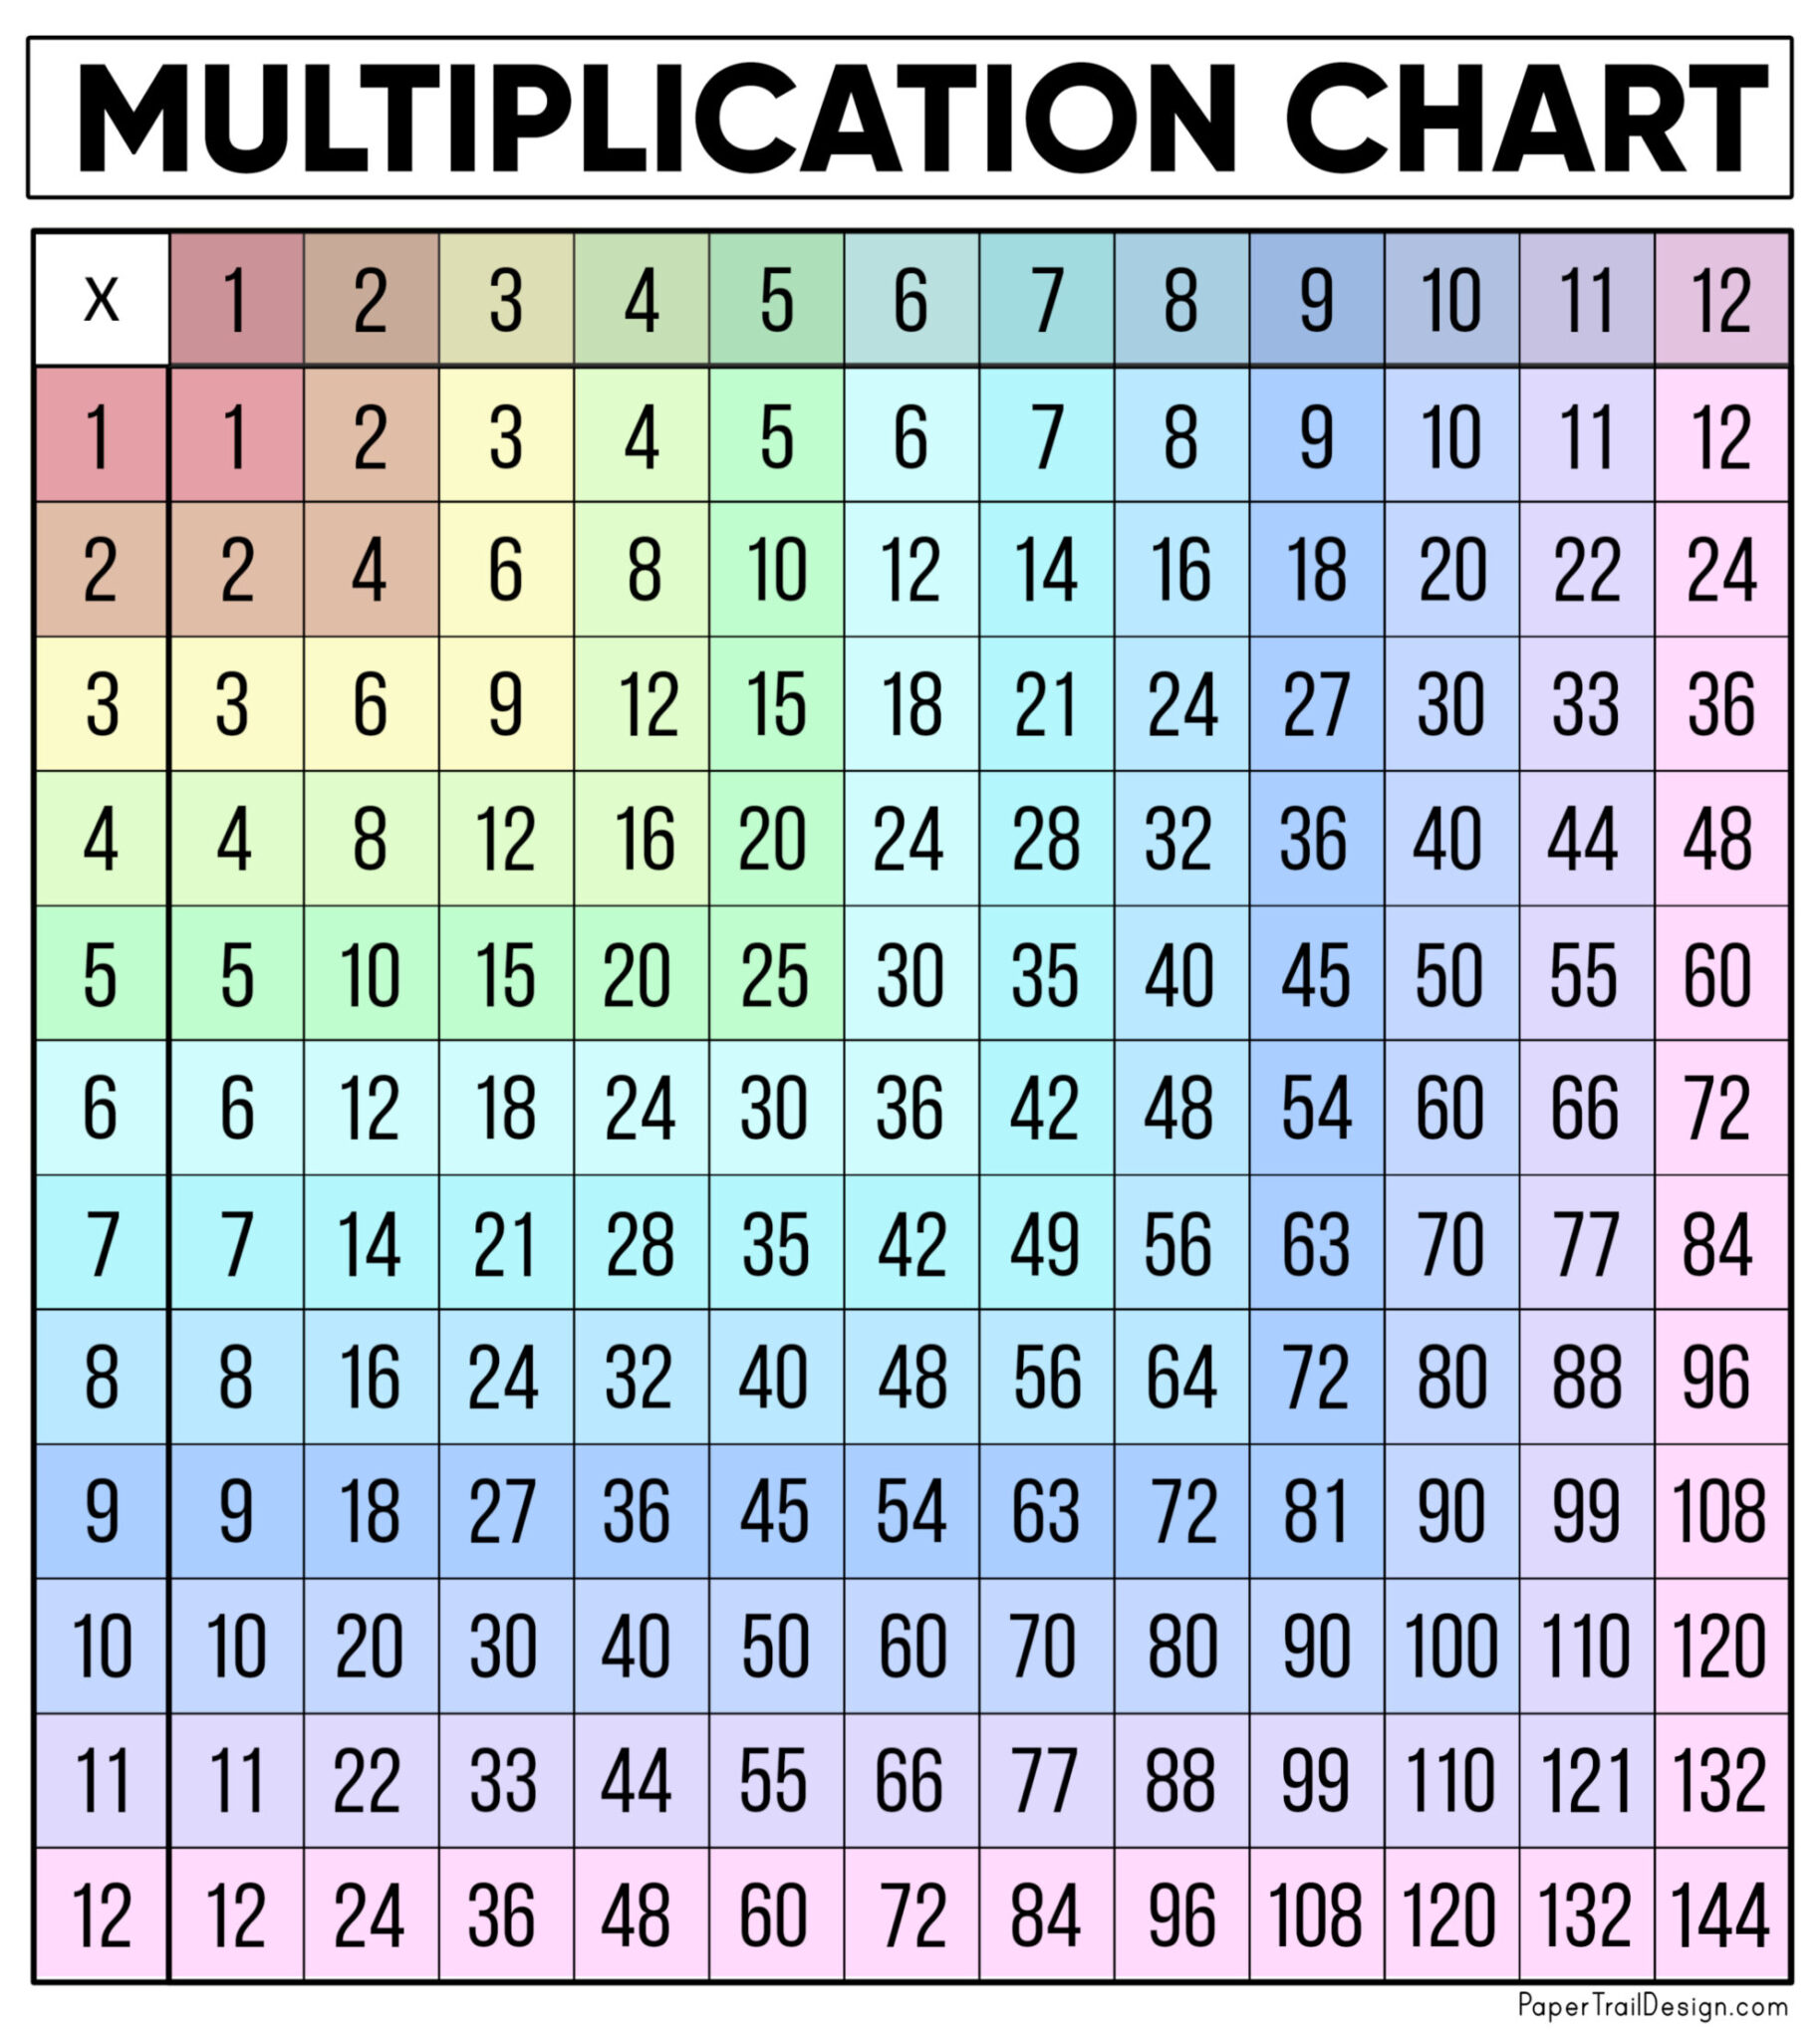 12x12 multiplication chart printable blank